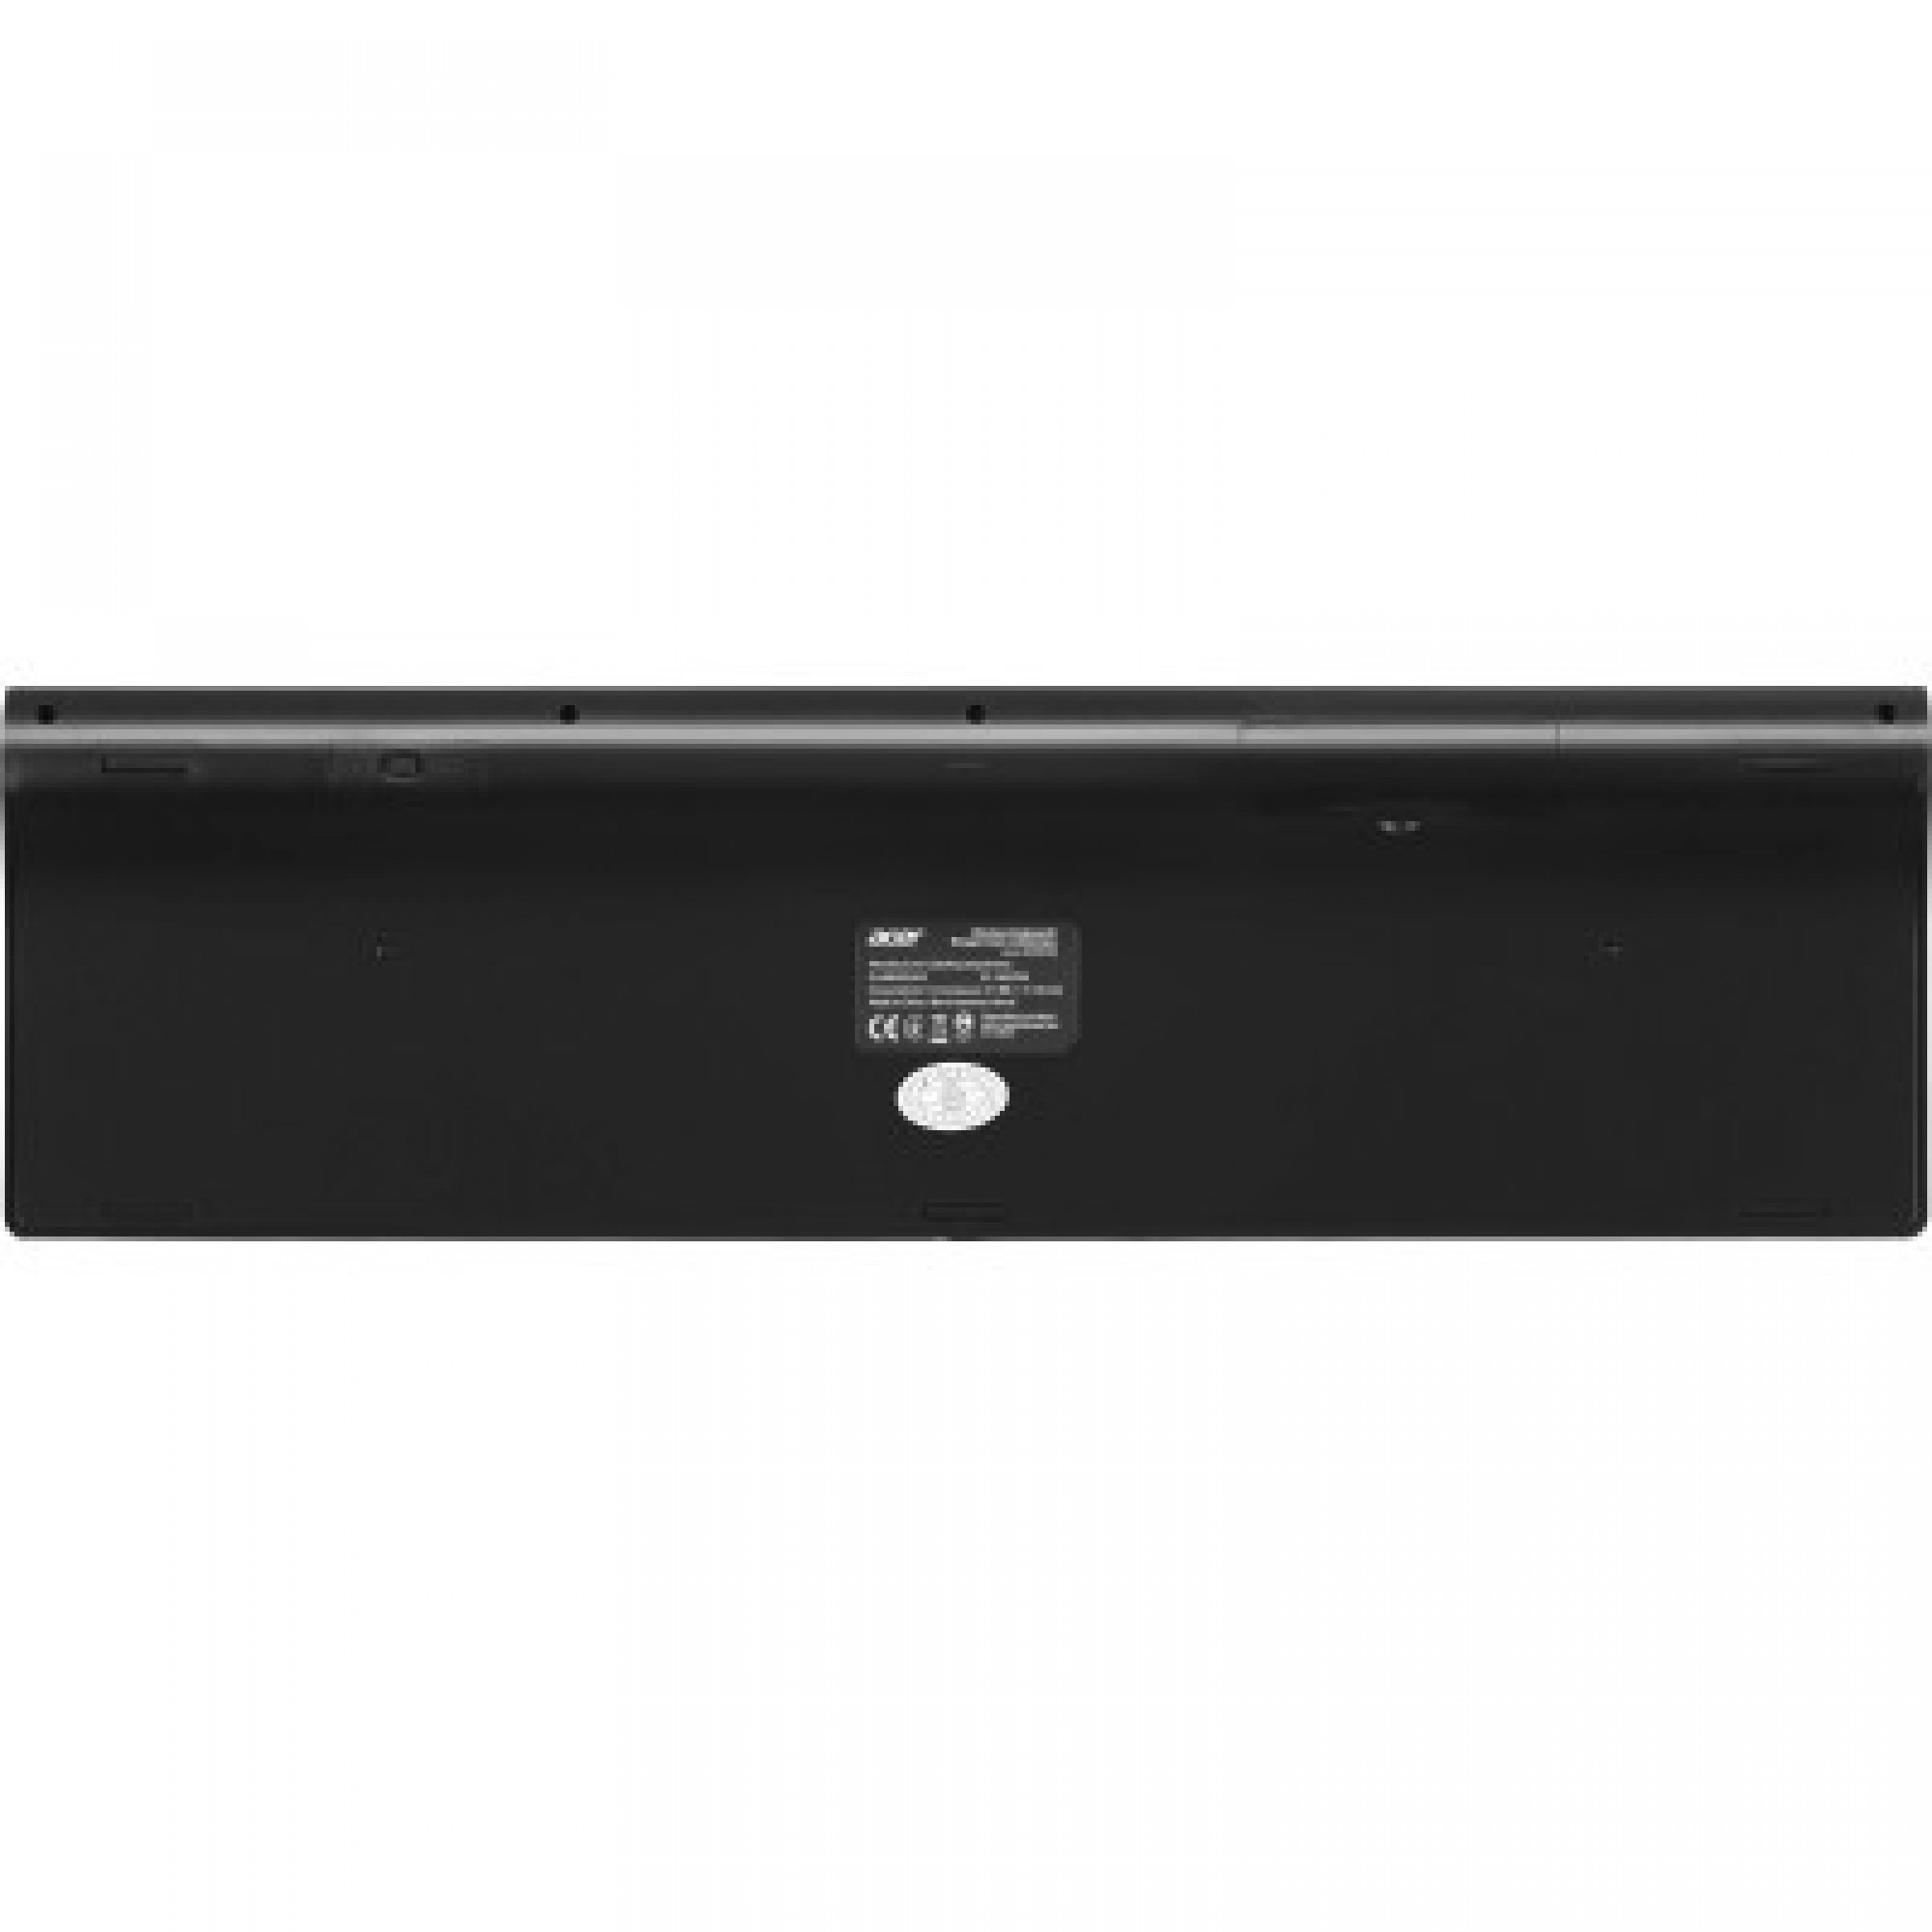 Комплект Acer OKR030 Wireless Black (ZL.KBDEE.00Z)